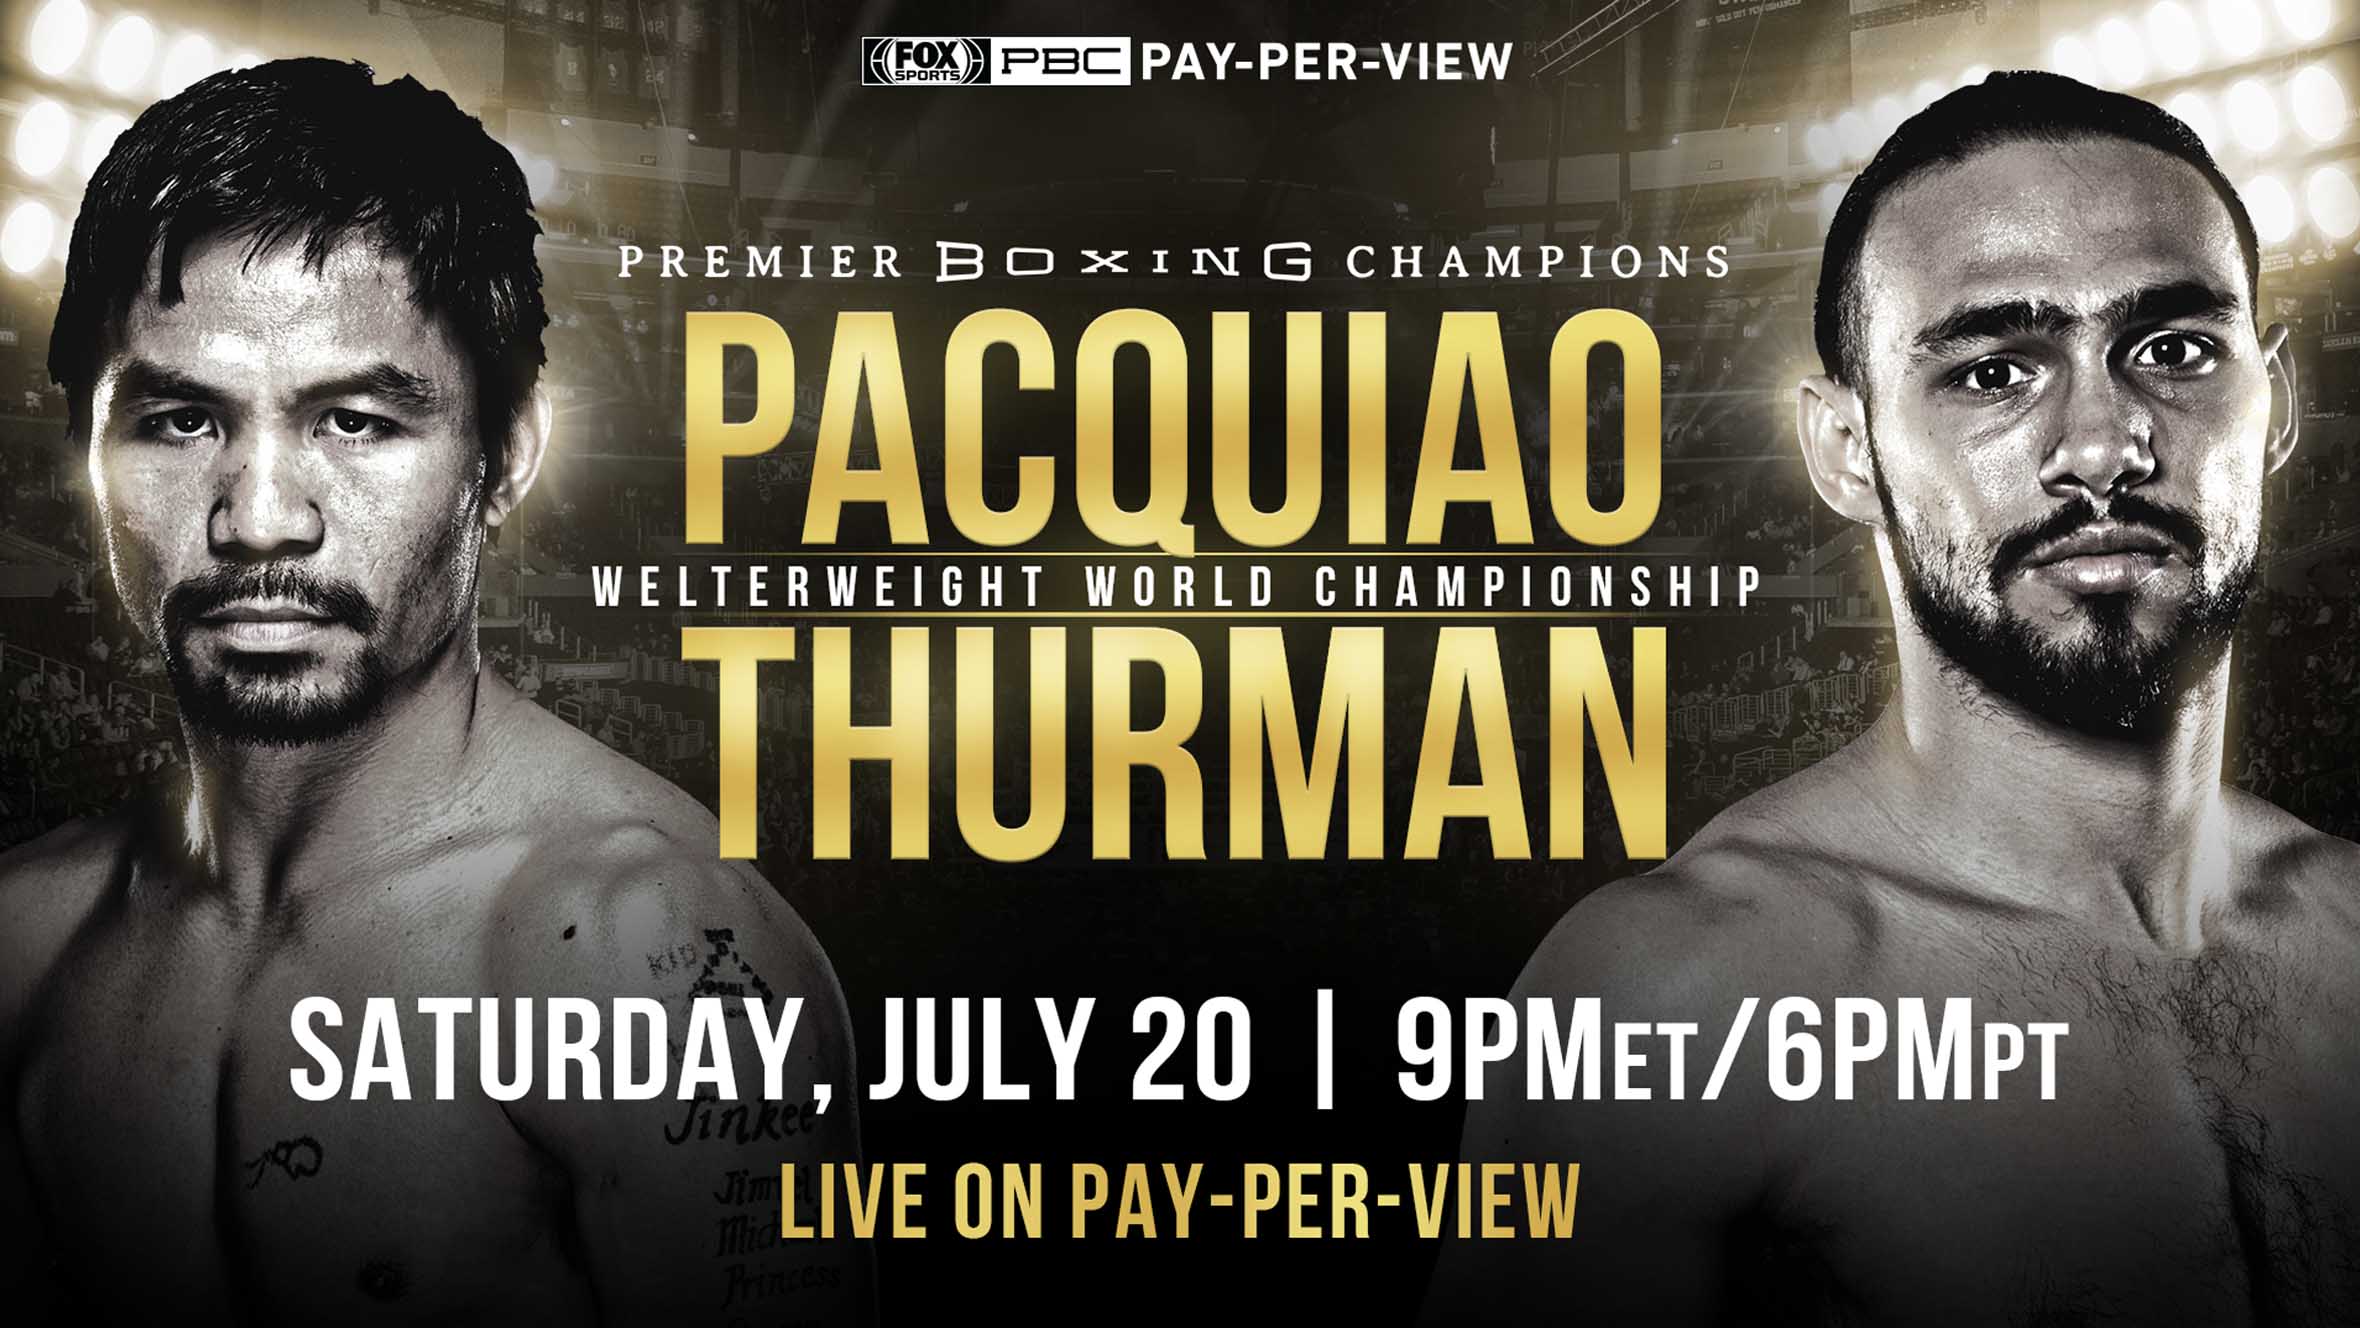 Pacquiao vs Thurman BoxingMatch